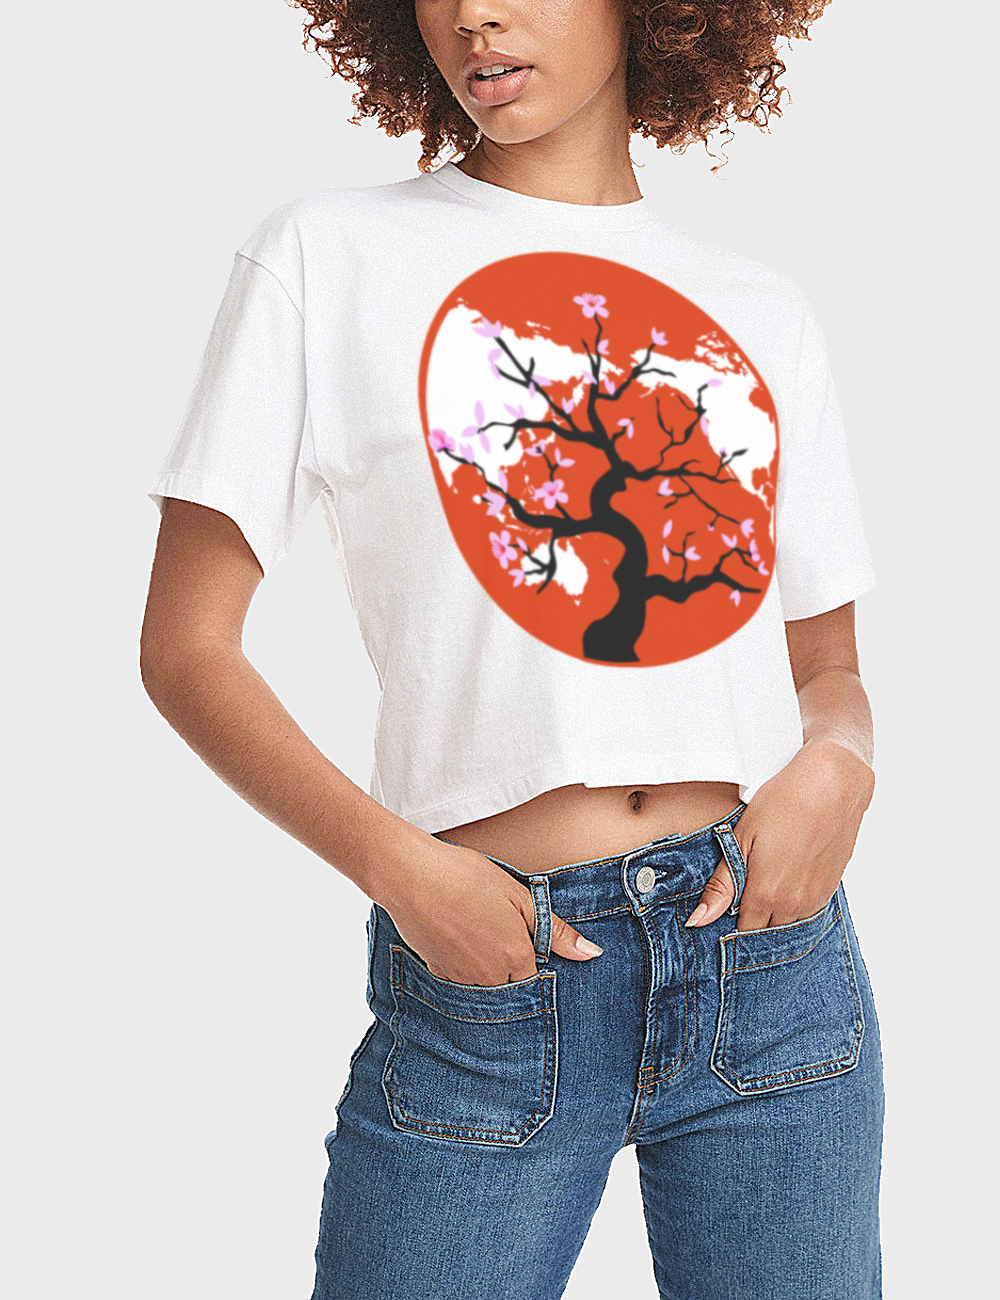 Japanese Worldwide Cherry Blossom Tree Women's Relaxed Crop Top T-Shirt OniTakai